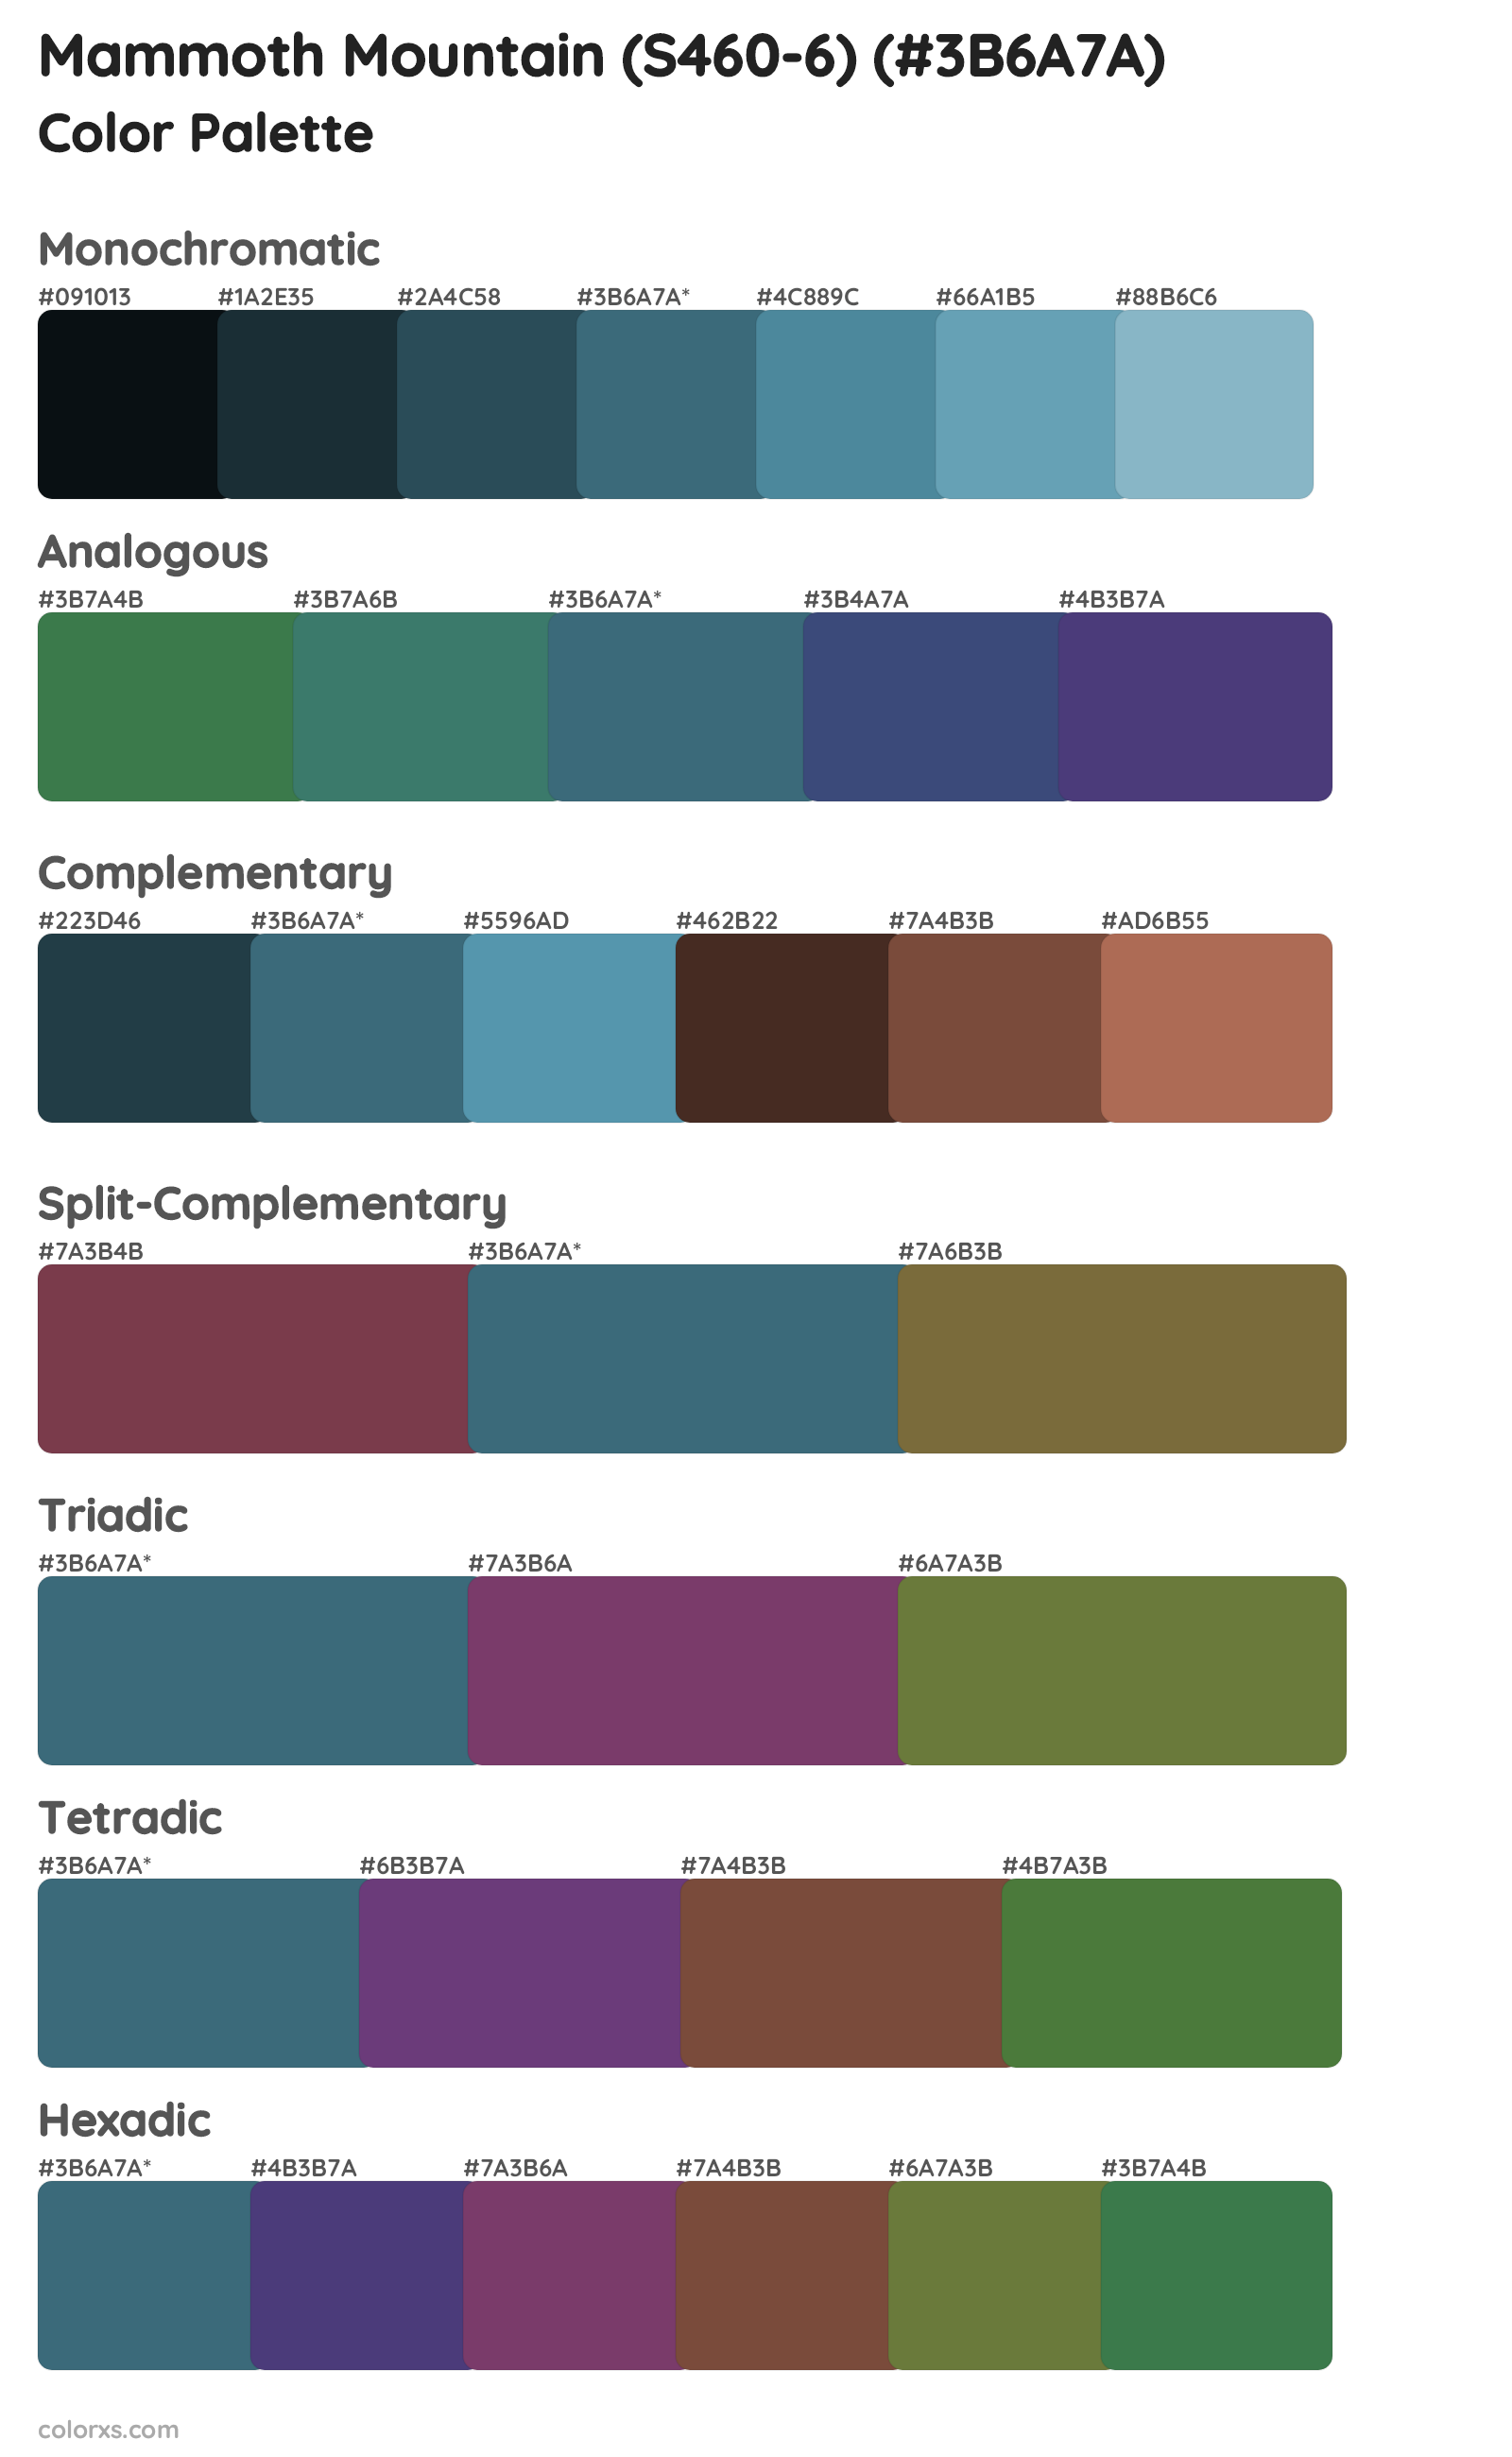 Mammoth Mountain (S460-6) Color Scheme Palettes